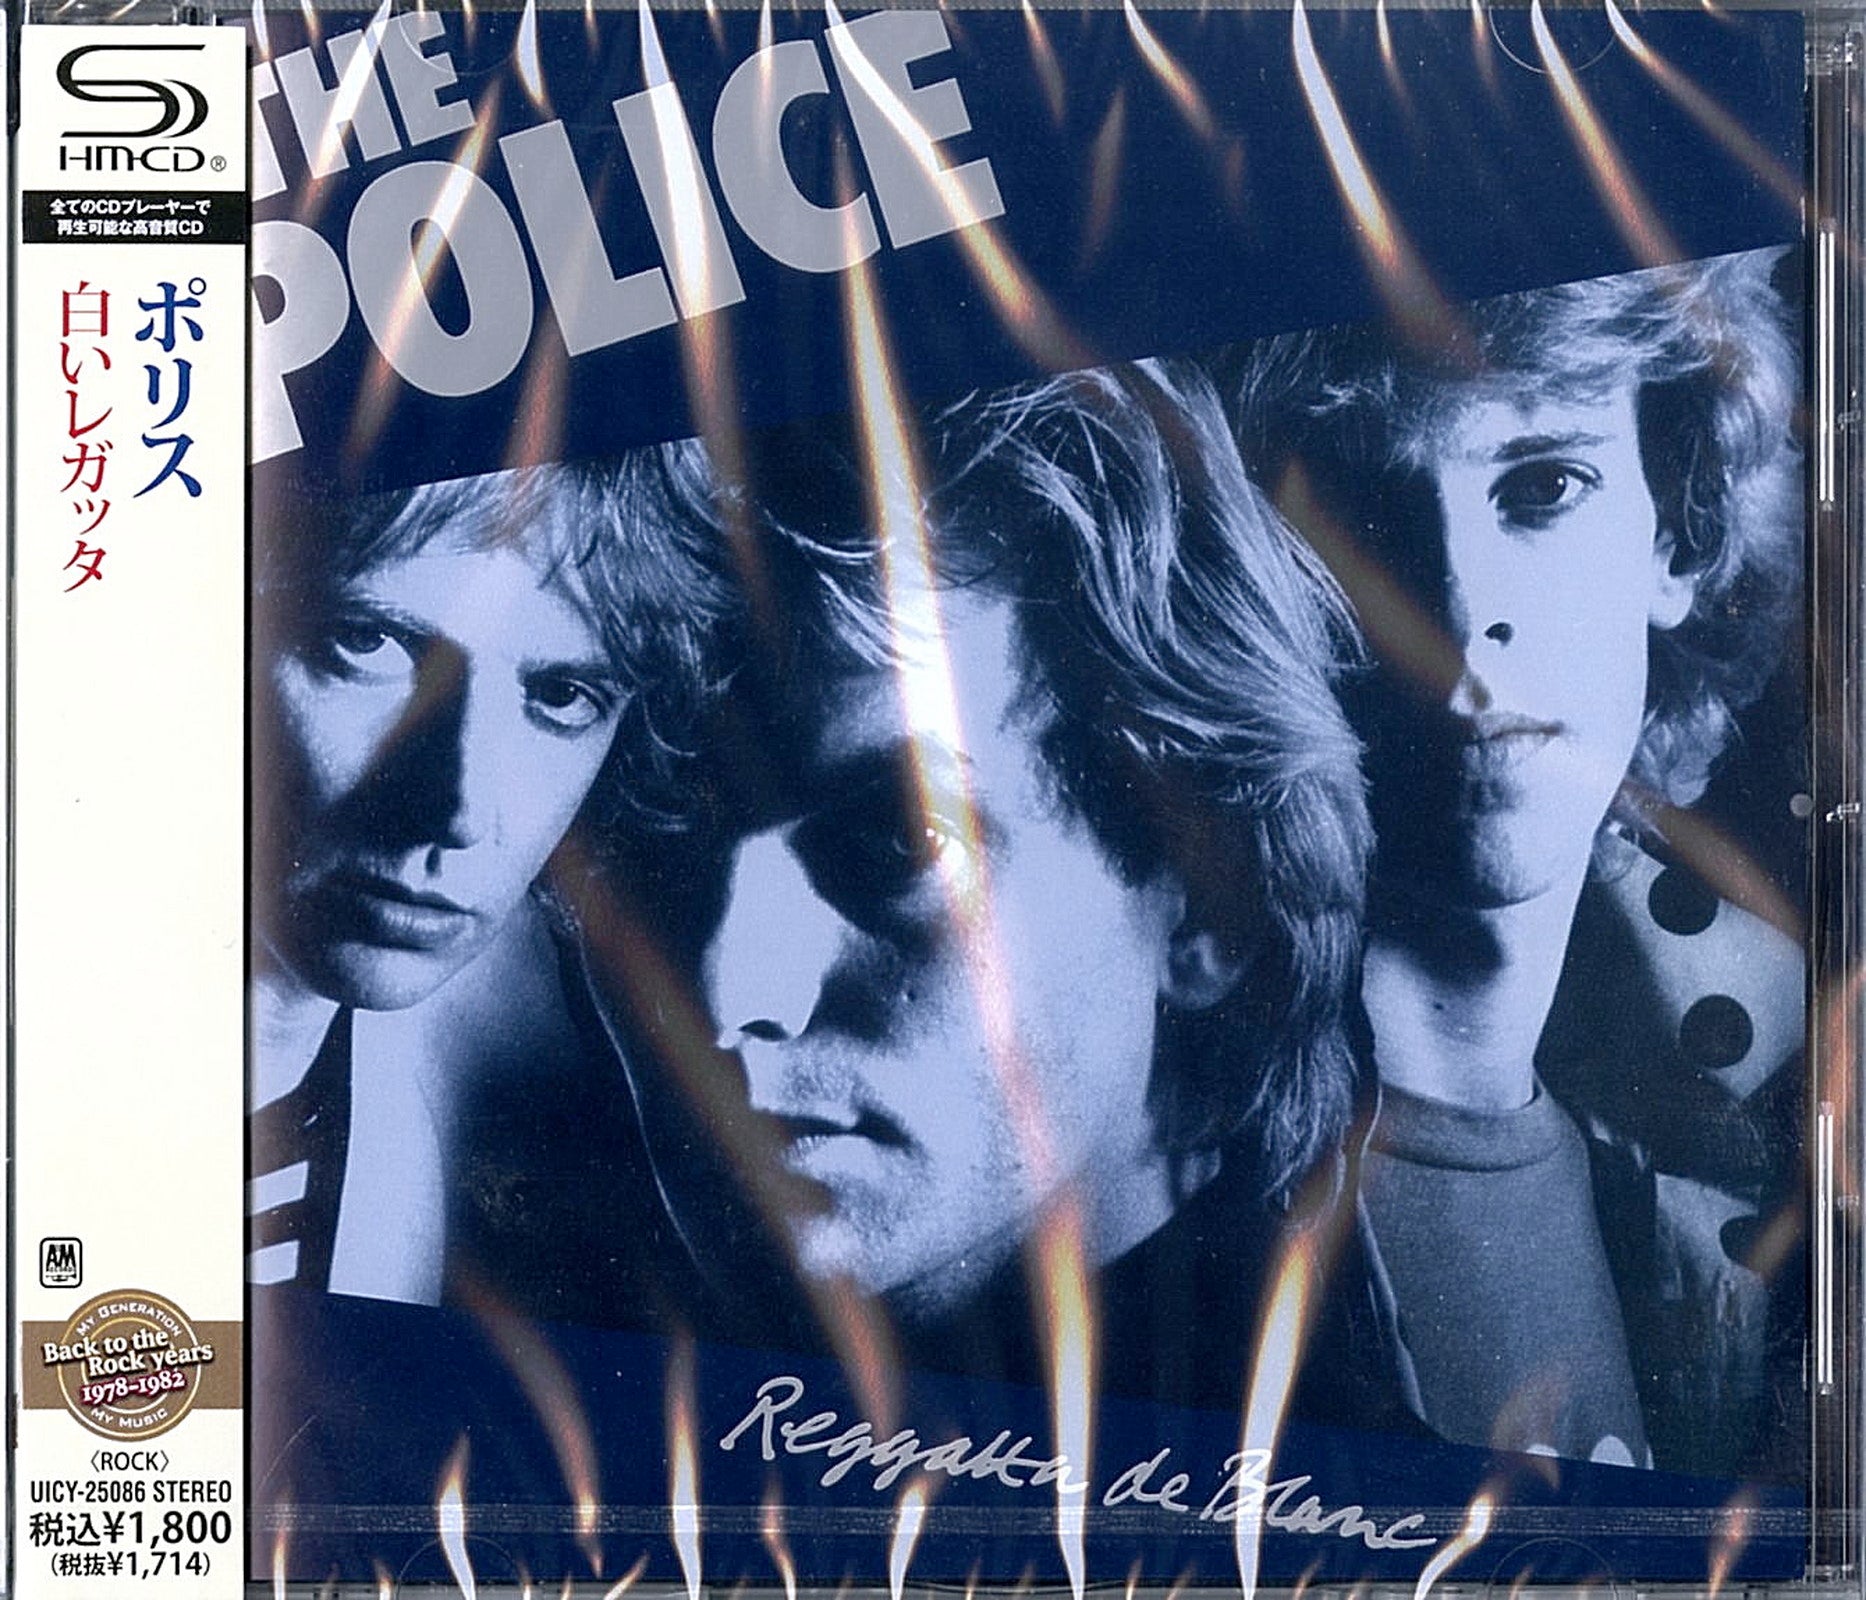 The Police - Regatta De Blanc - Japan SHM-CD – CDs Vinyl Japan Store CD